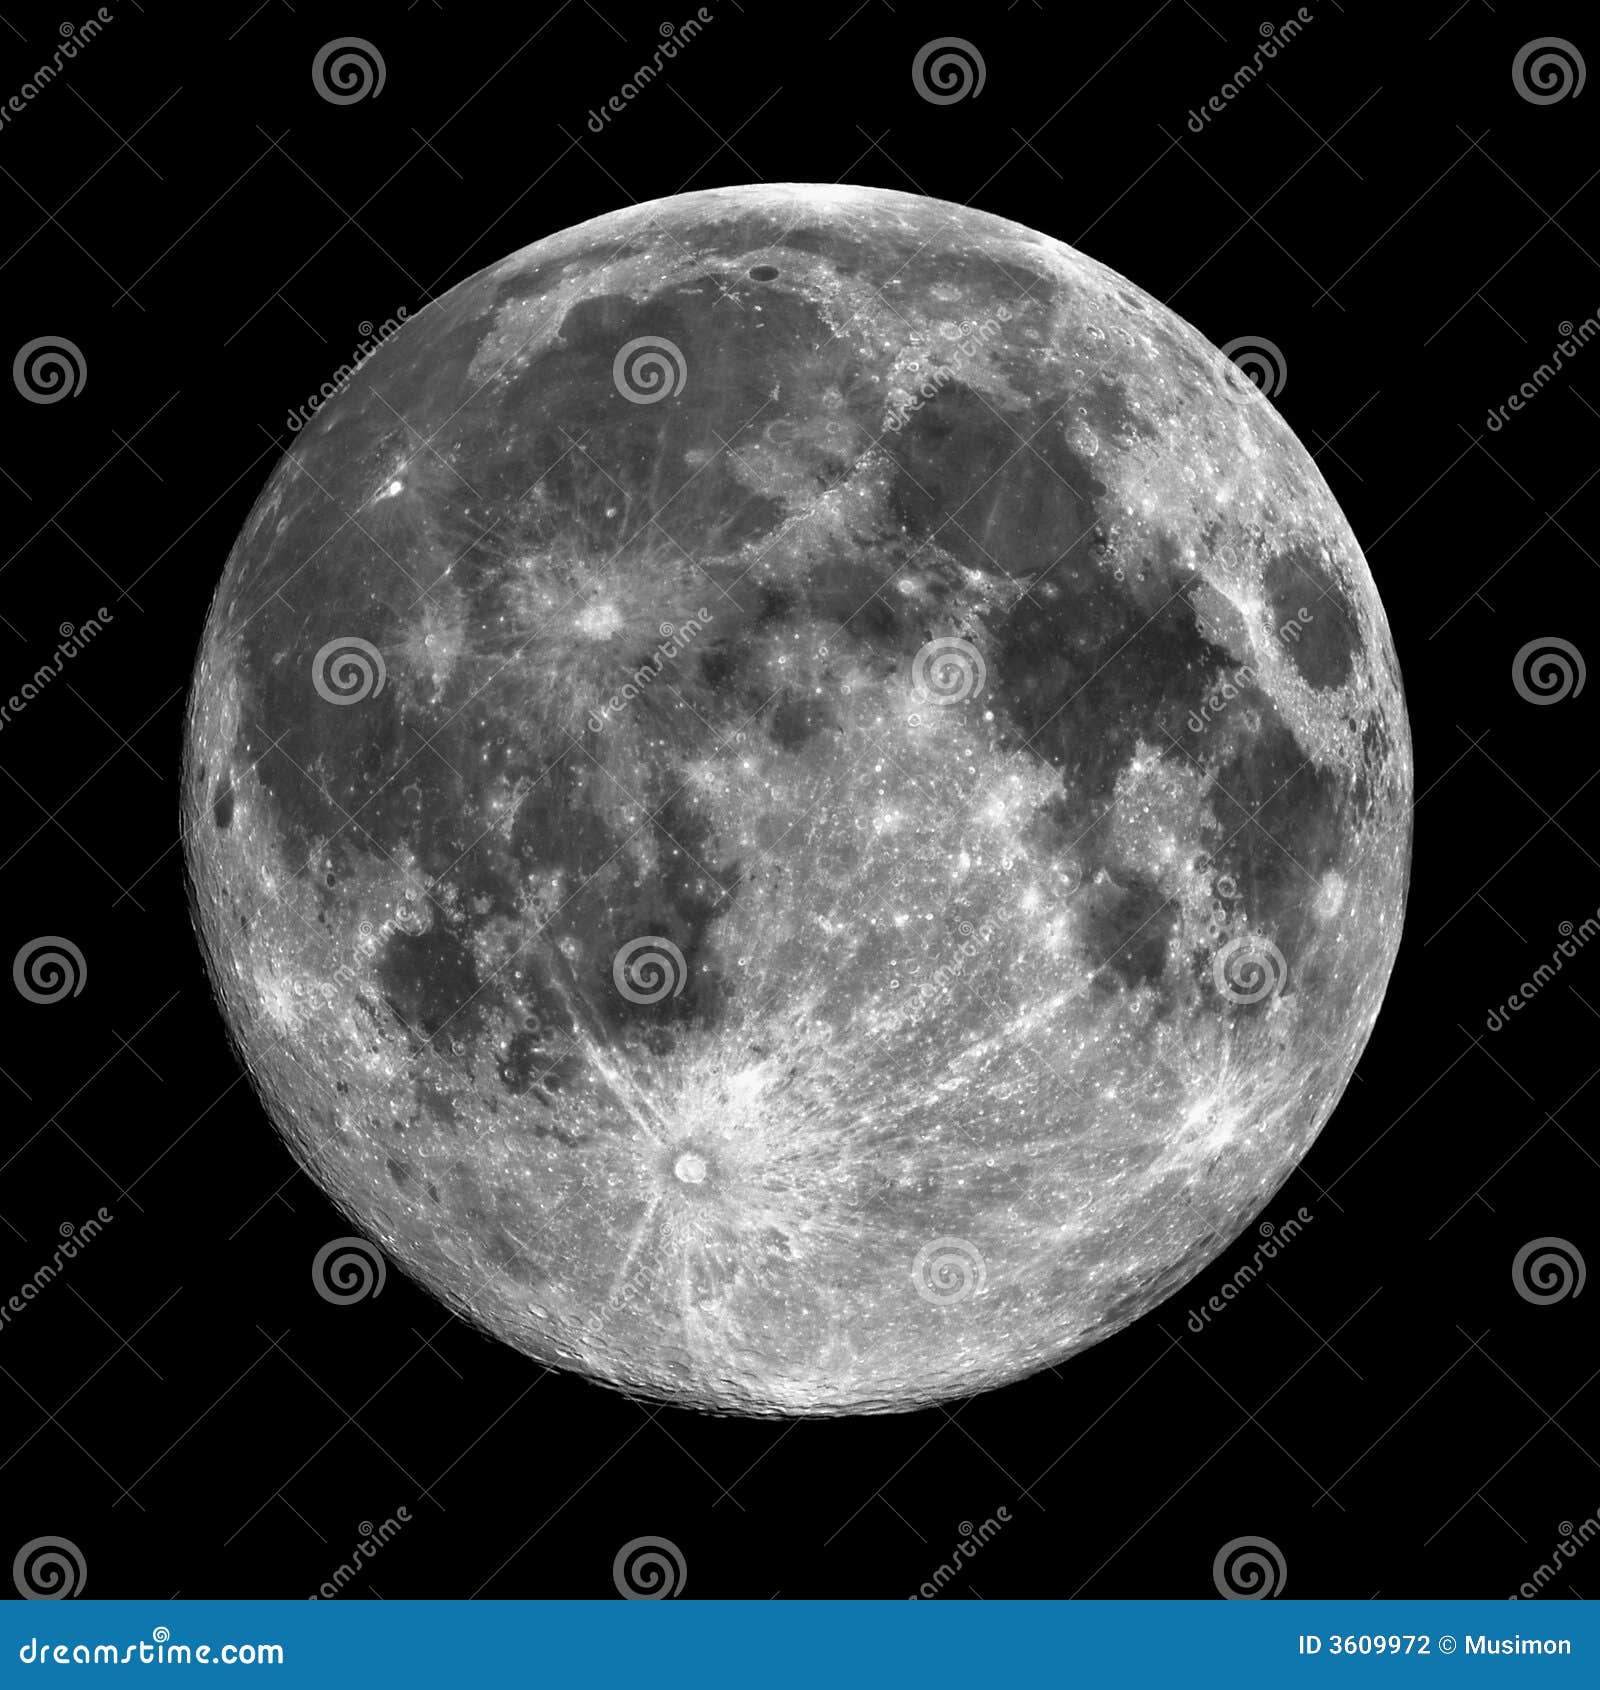 high resolution moon